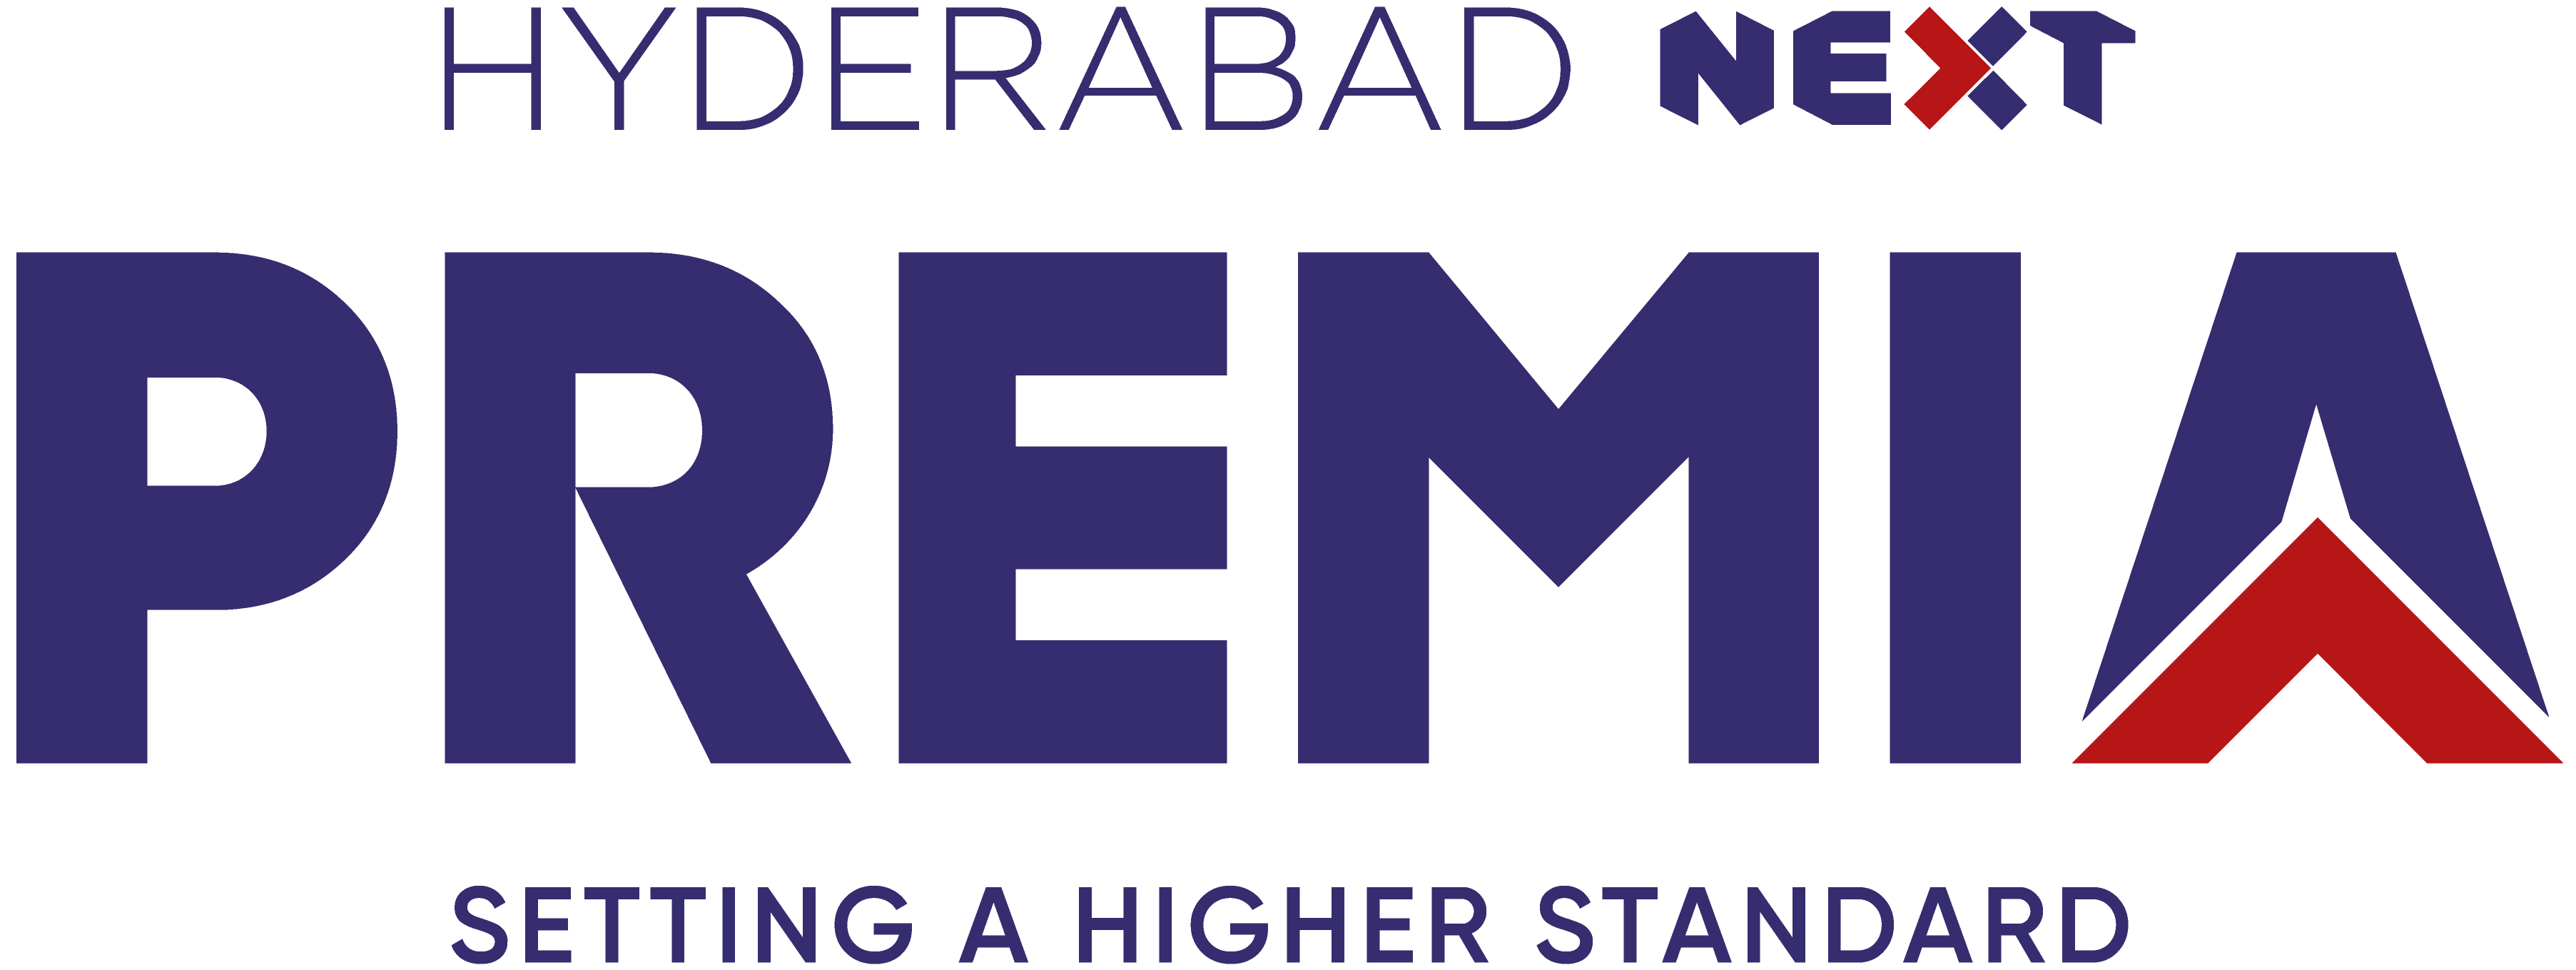 Hyderabad Next Premia